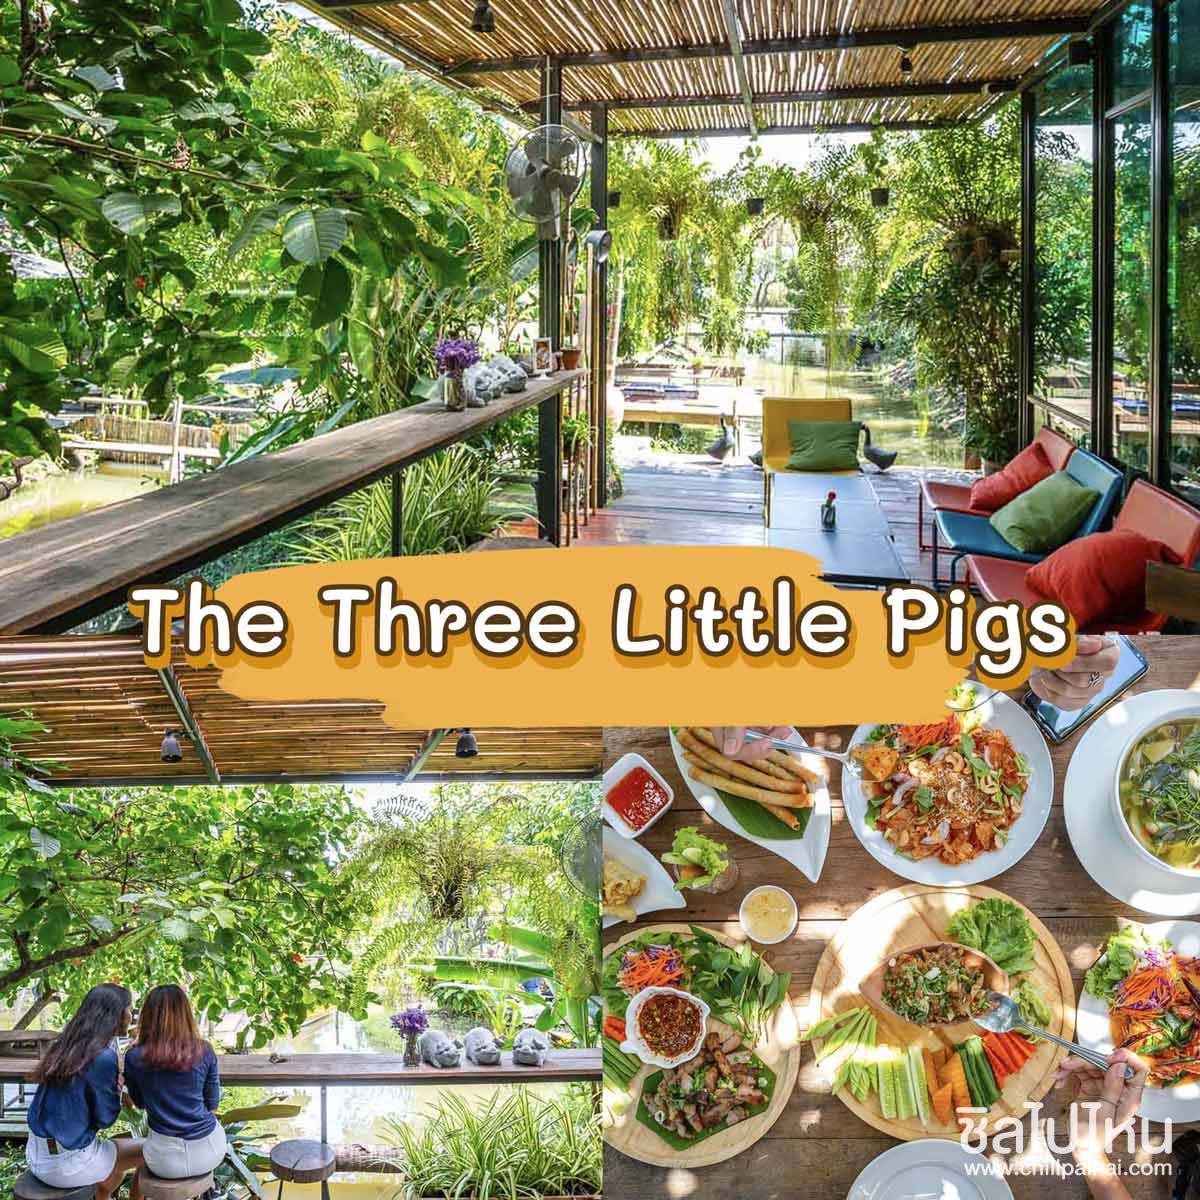 The Three Little Pigs Farm & Café